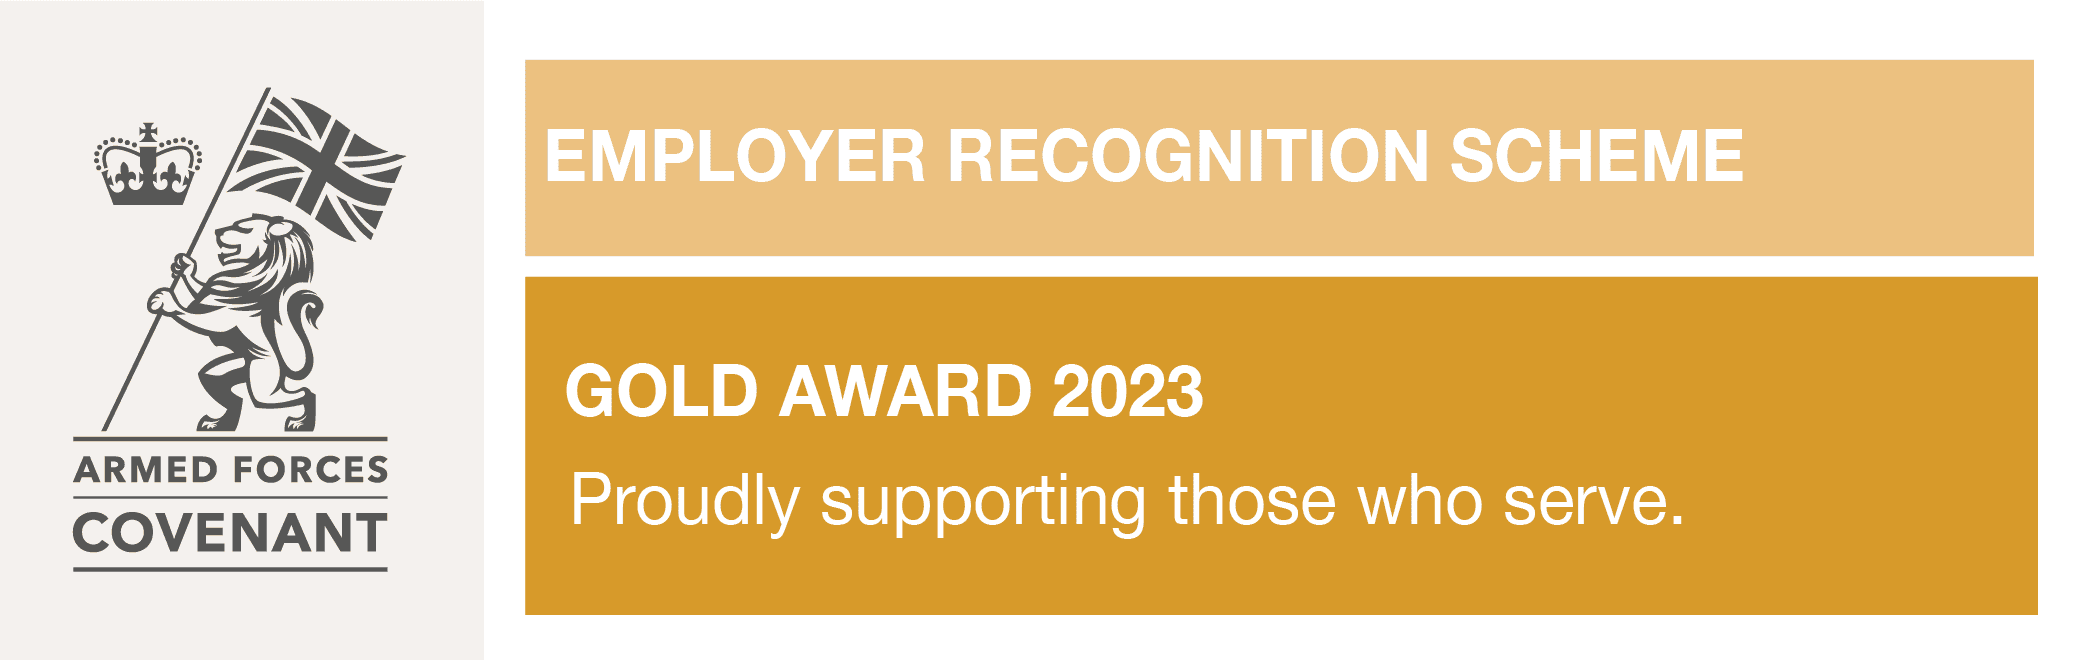 Employee recognition scheme gold award logo